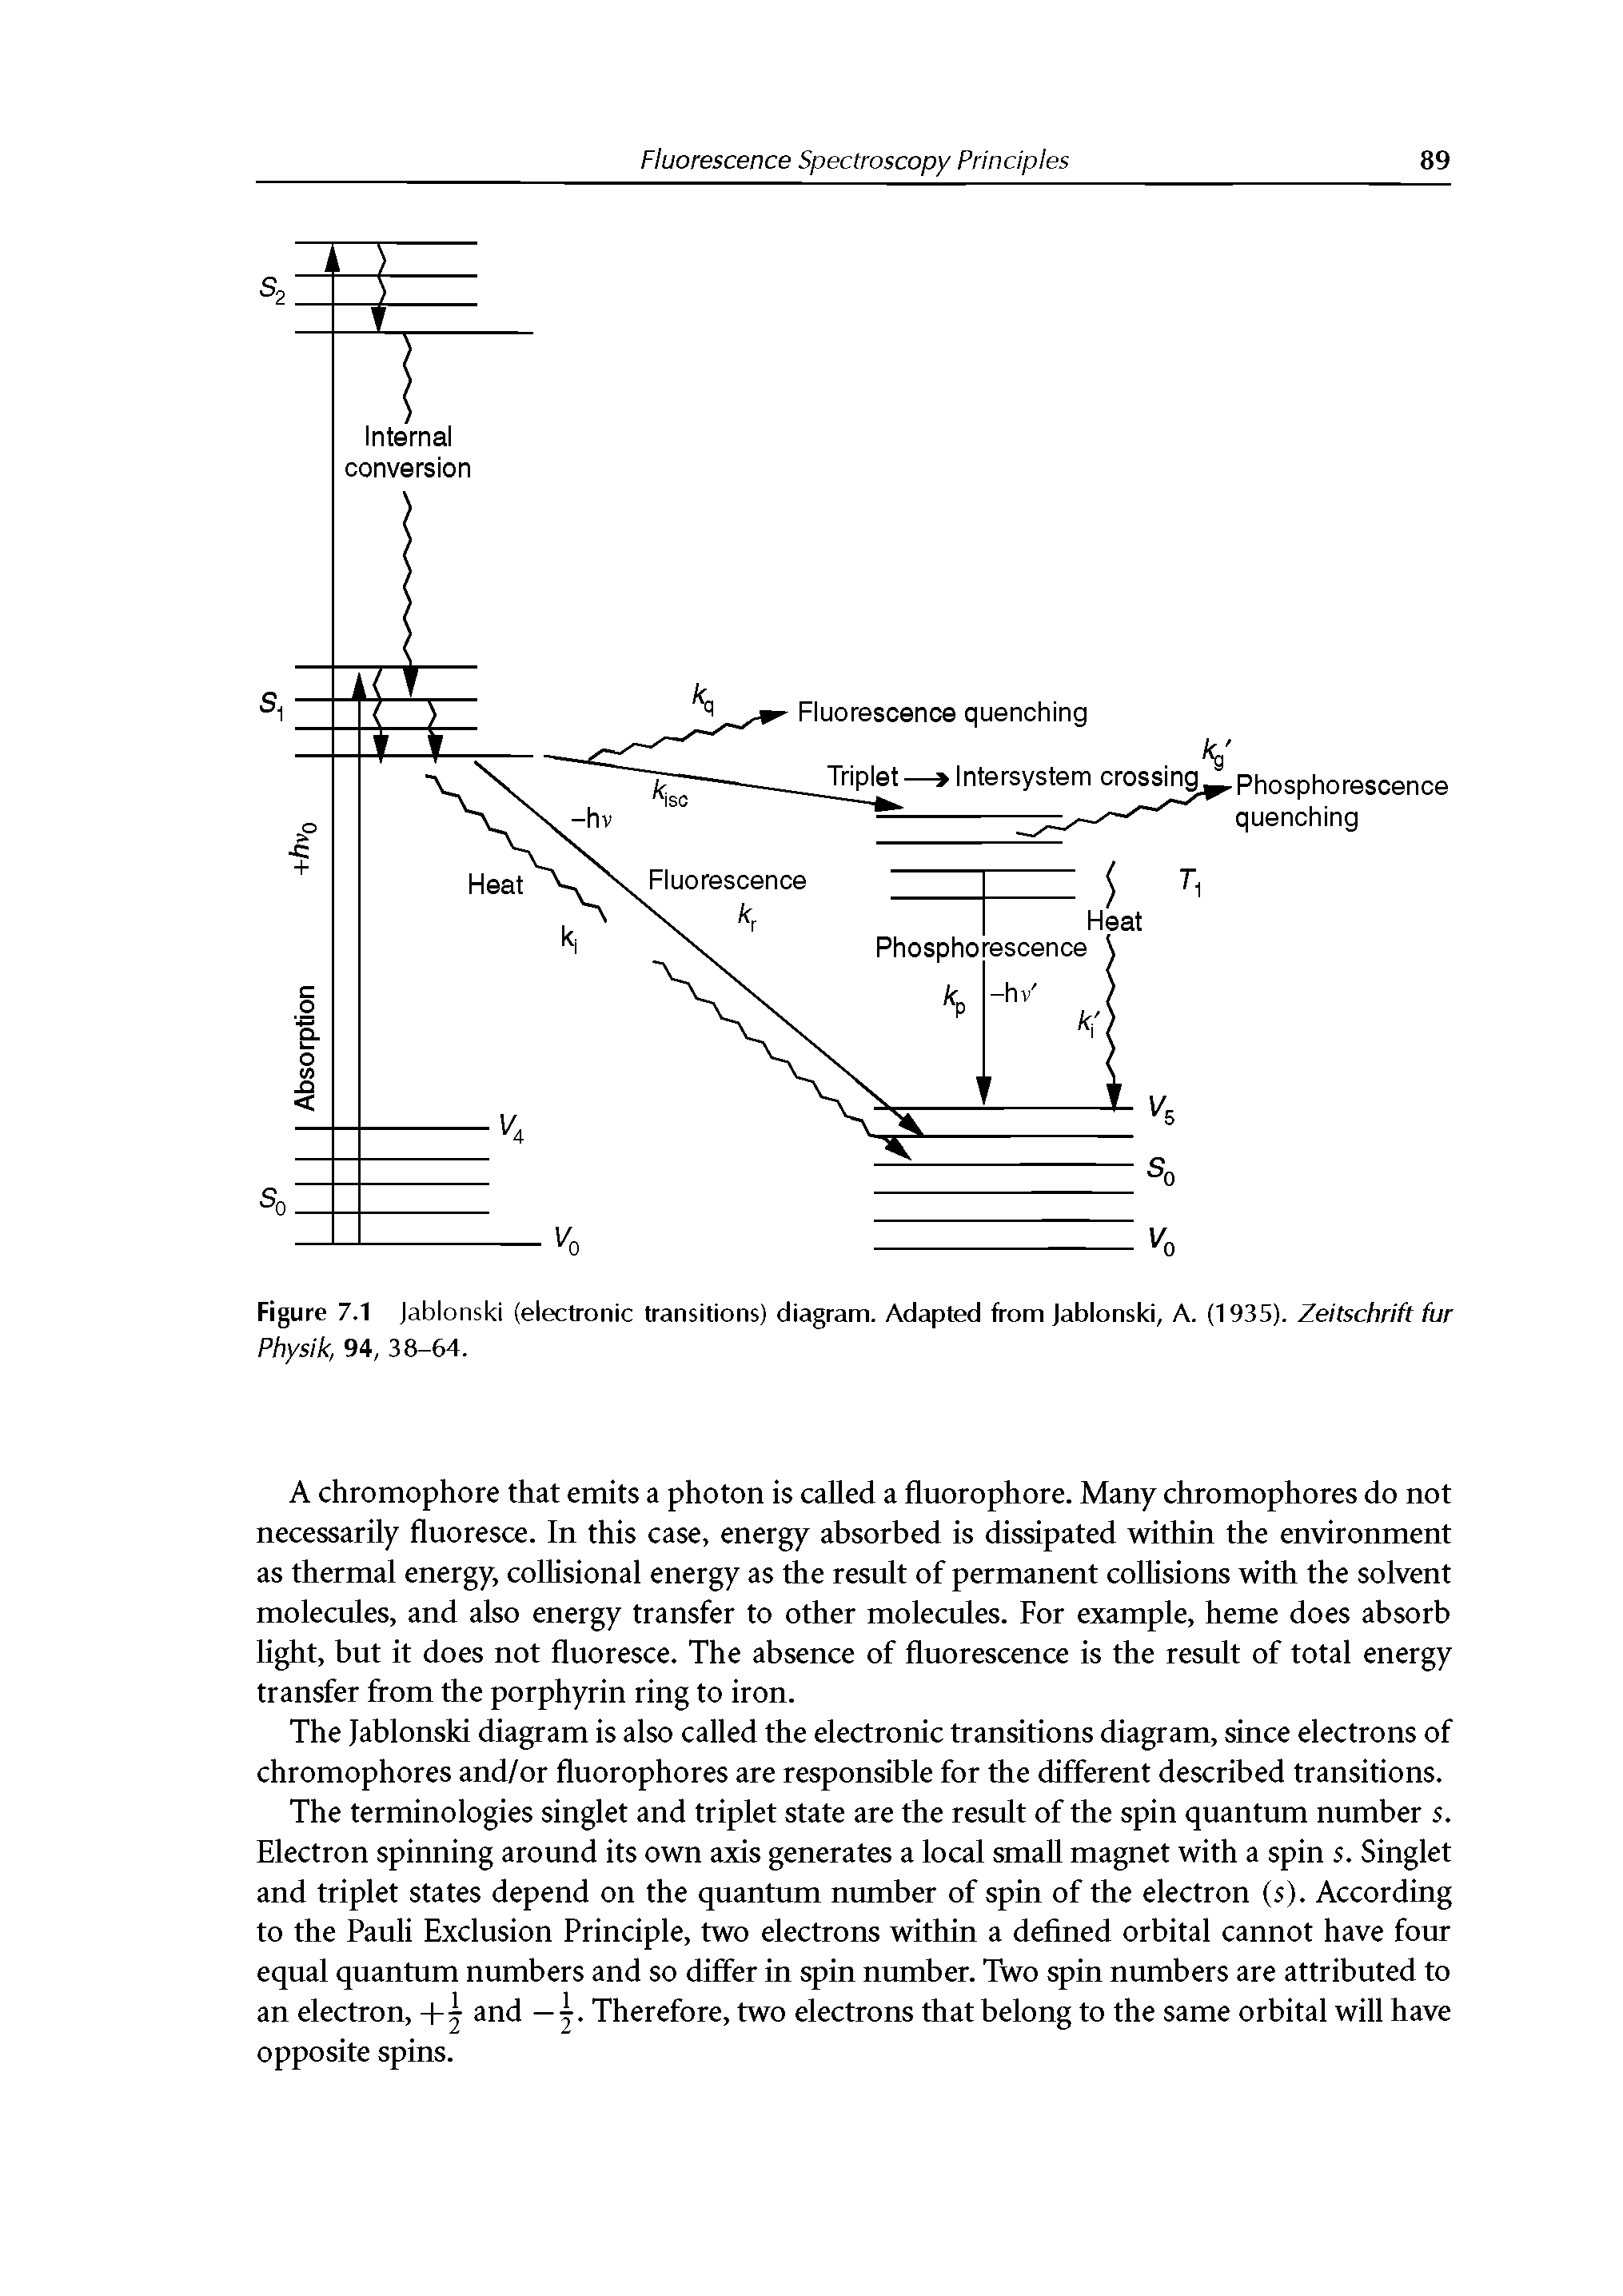 Figure 7.1 Jablonski (electronic transitions) diagram. Adapted from Jablonski, A. (1935). Zeitschrift fur Physik, 94, 38-64.